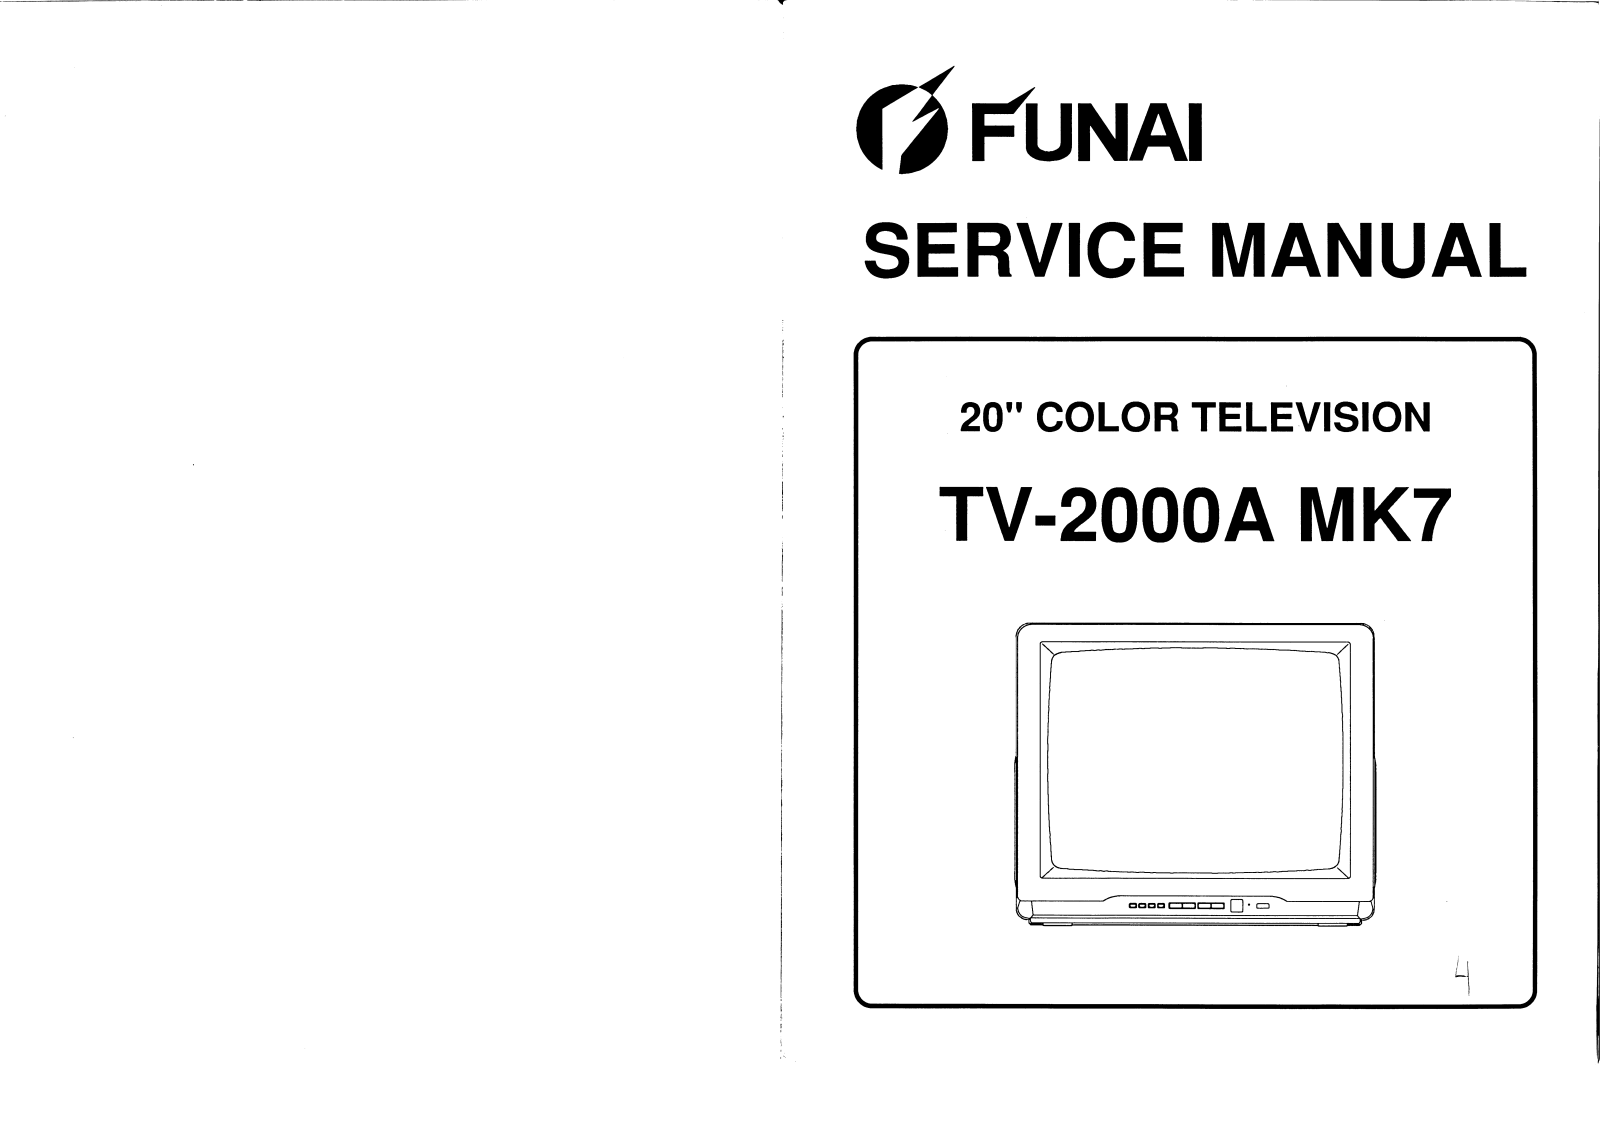 Funai TV-2000A MK7 Service manual